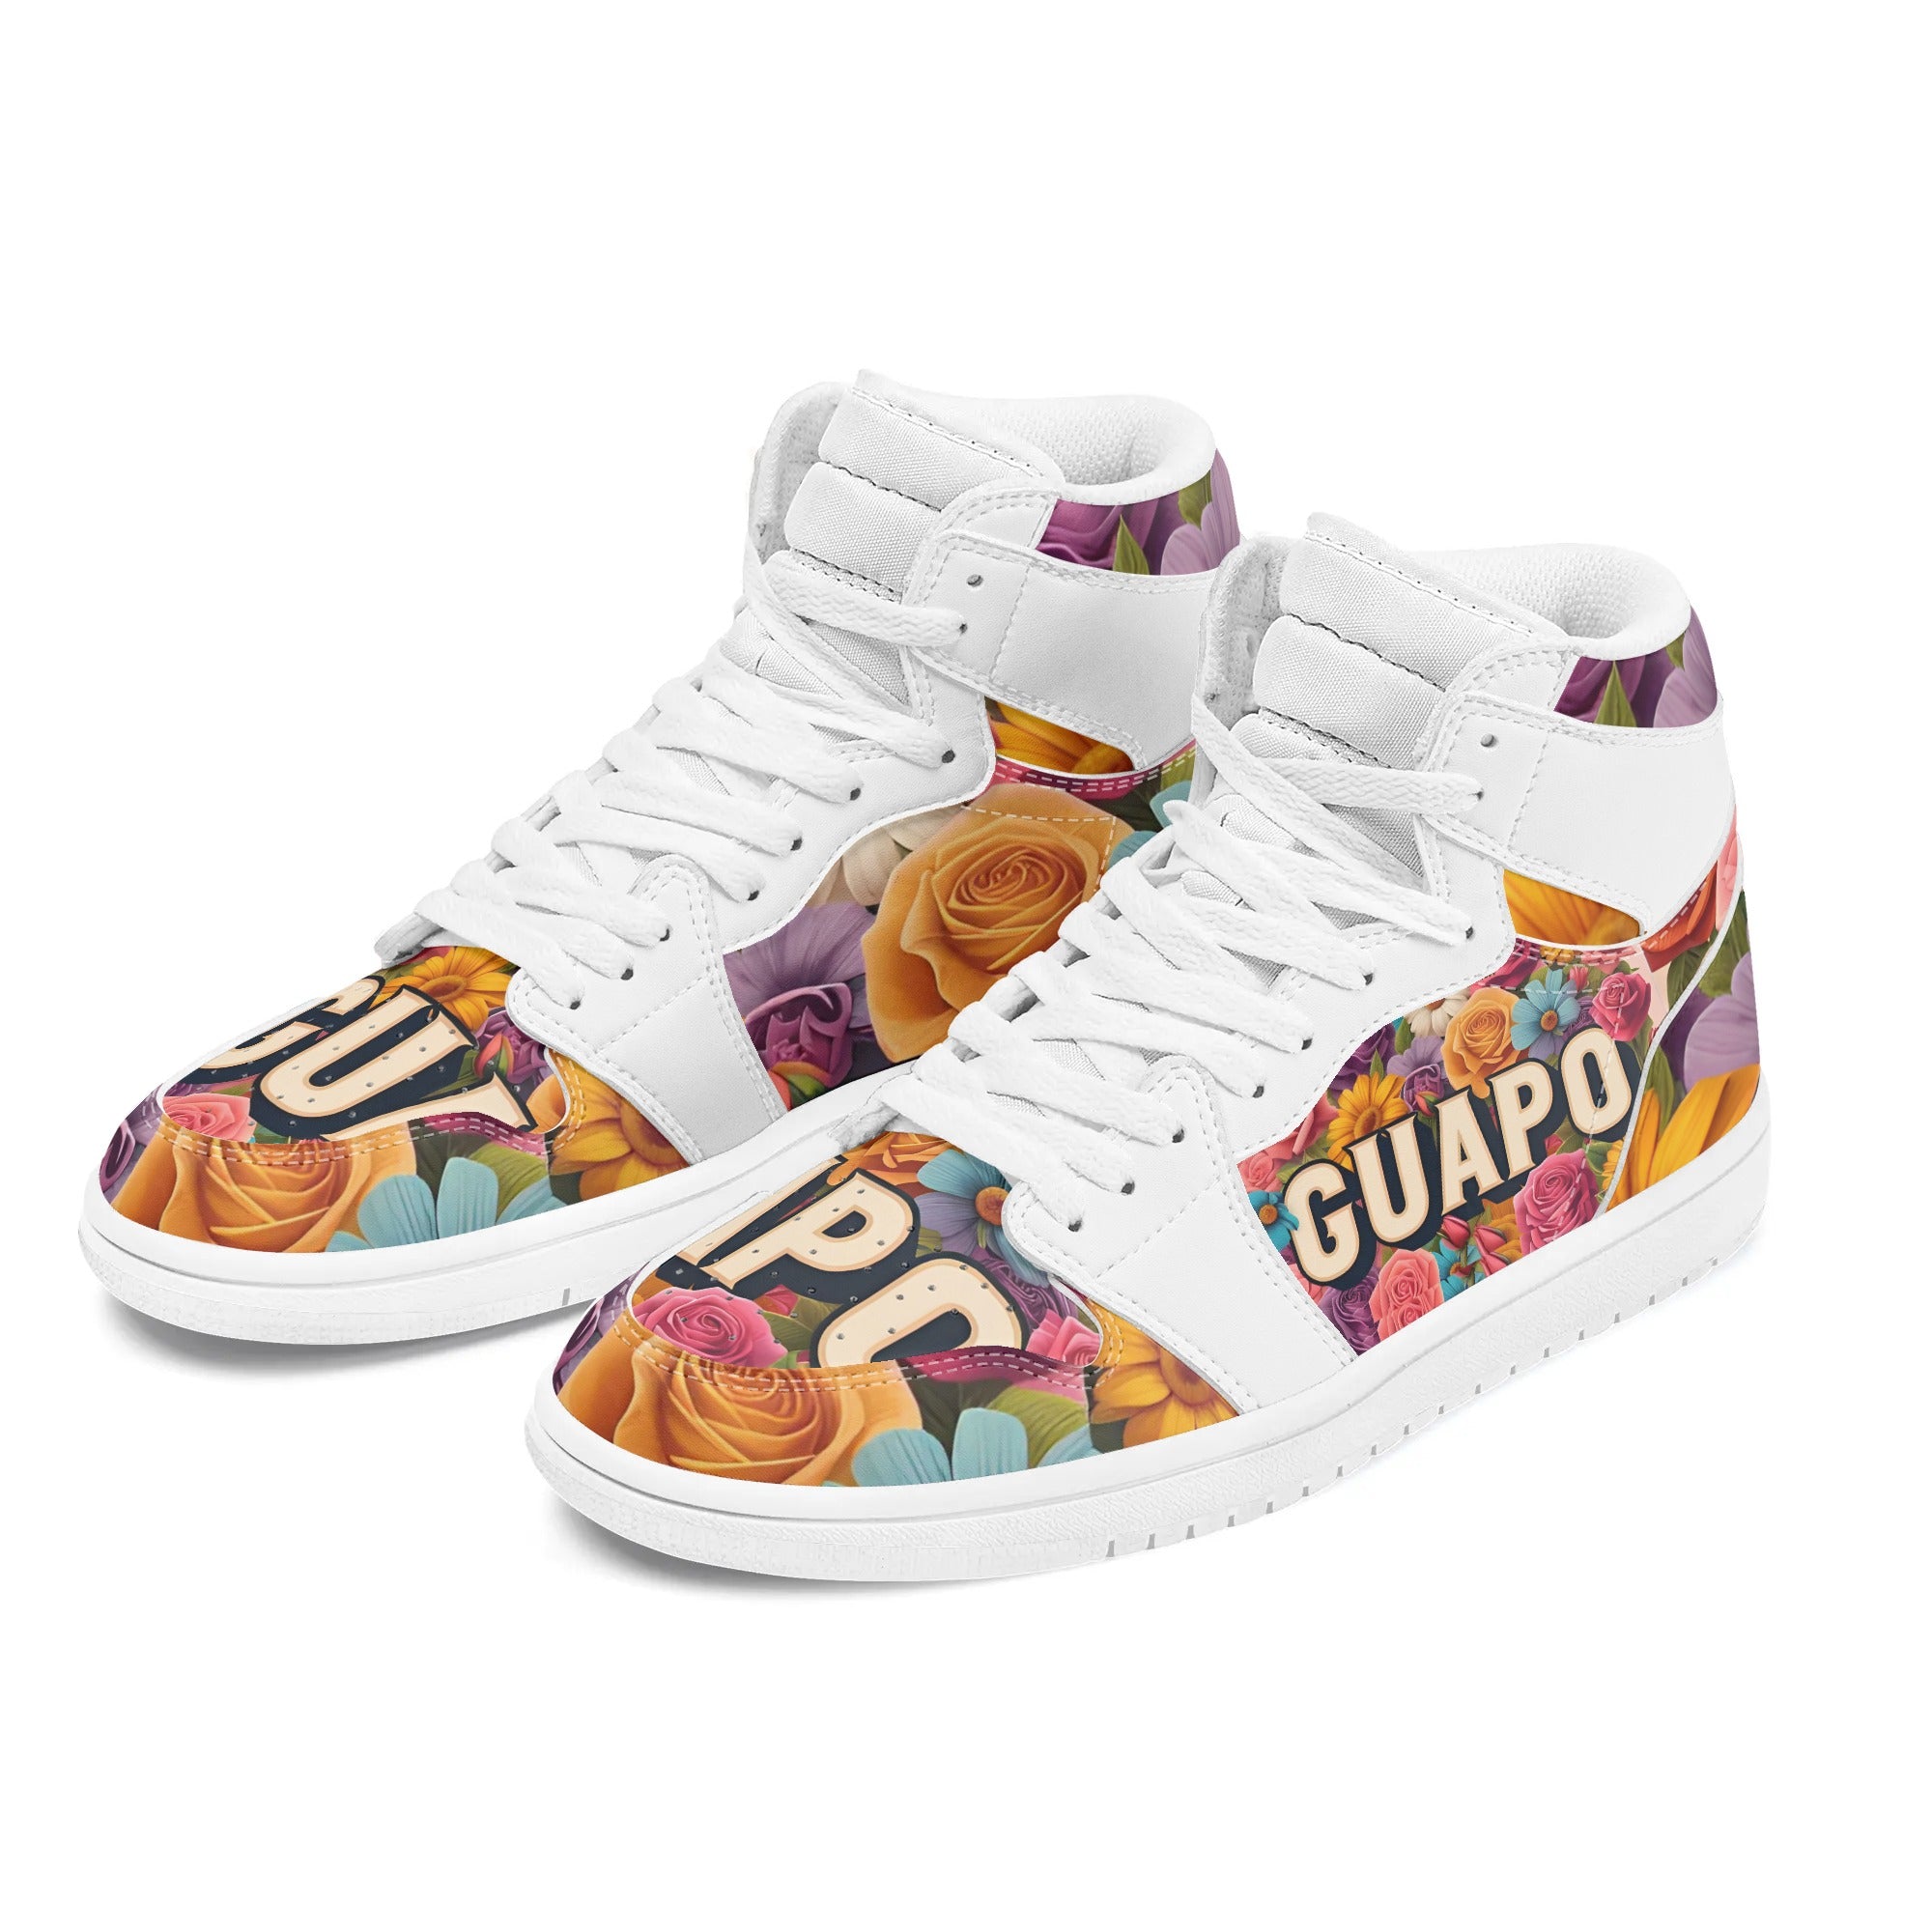 Guapo | Customized Sneakers | Shoe Zero